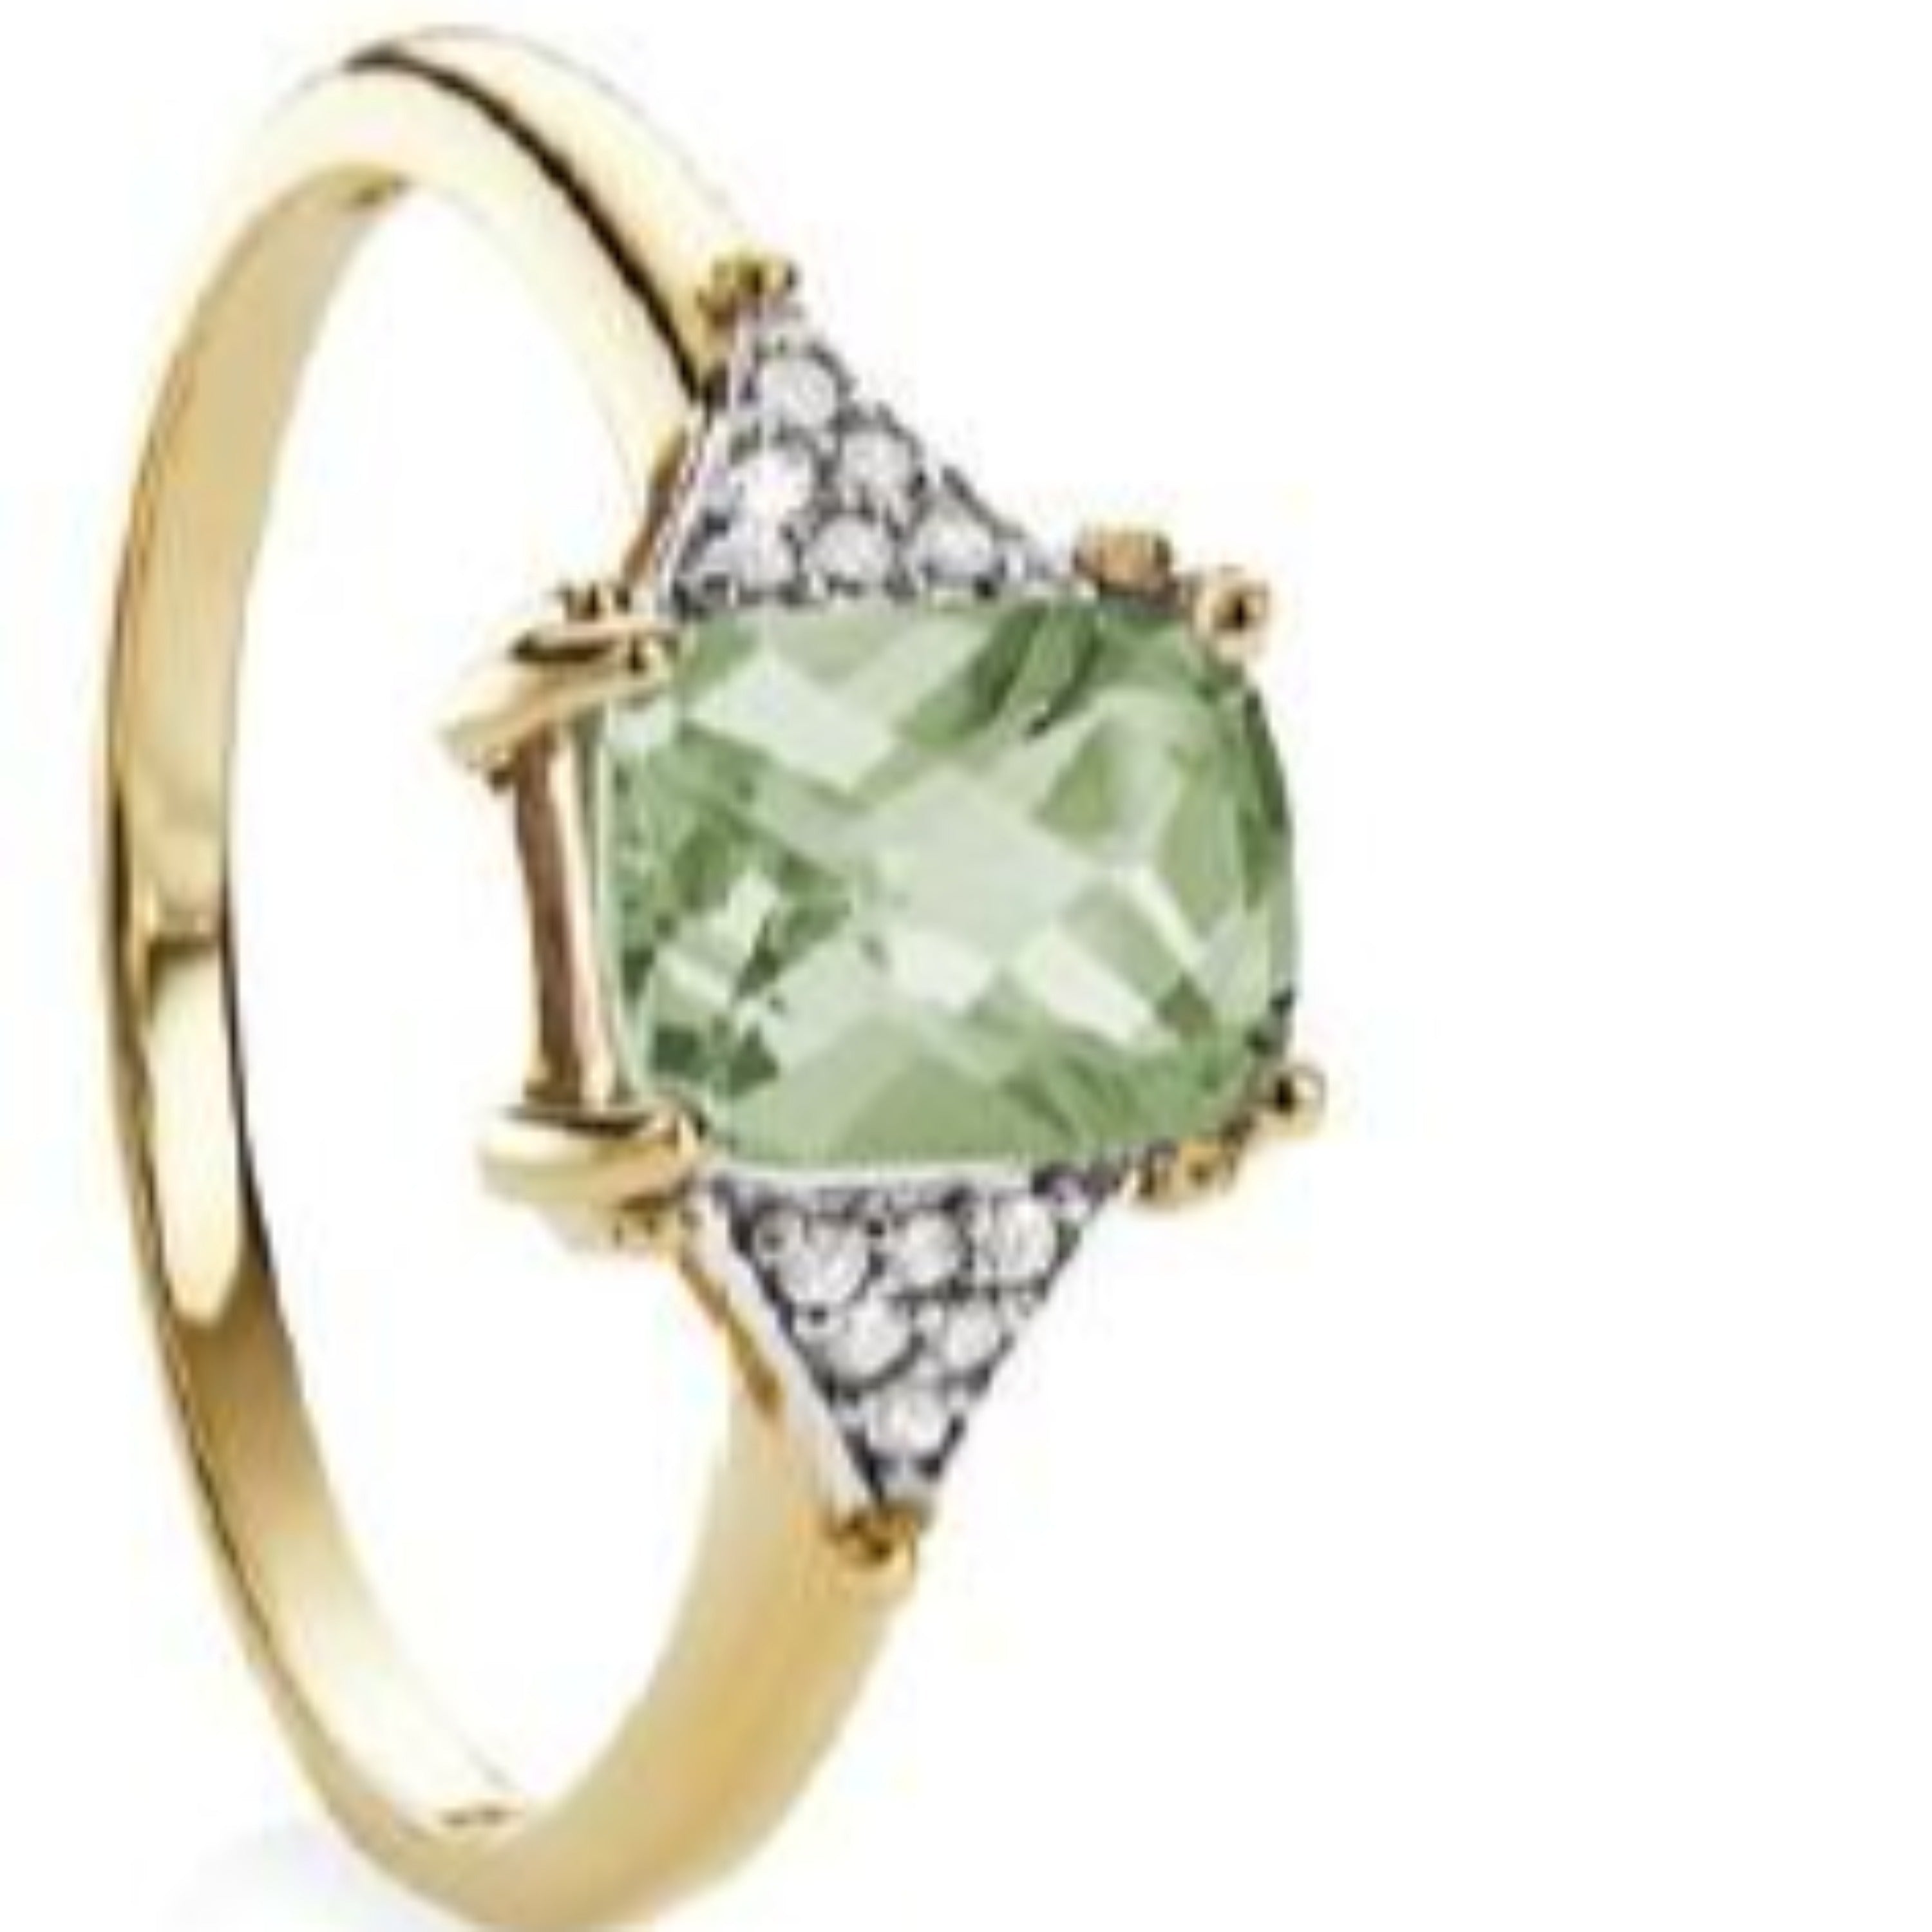 9ct Yellow Gold Green Amethyst & Diamond Ring